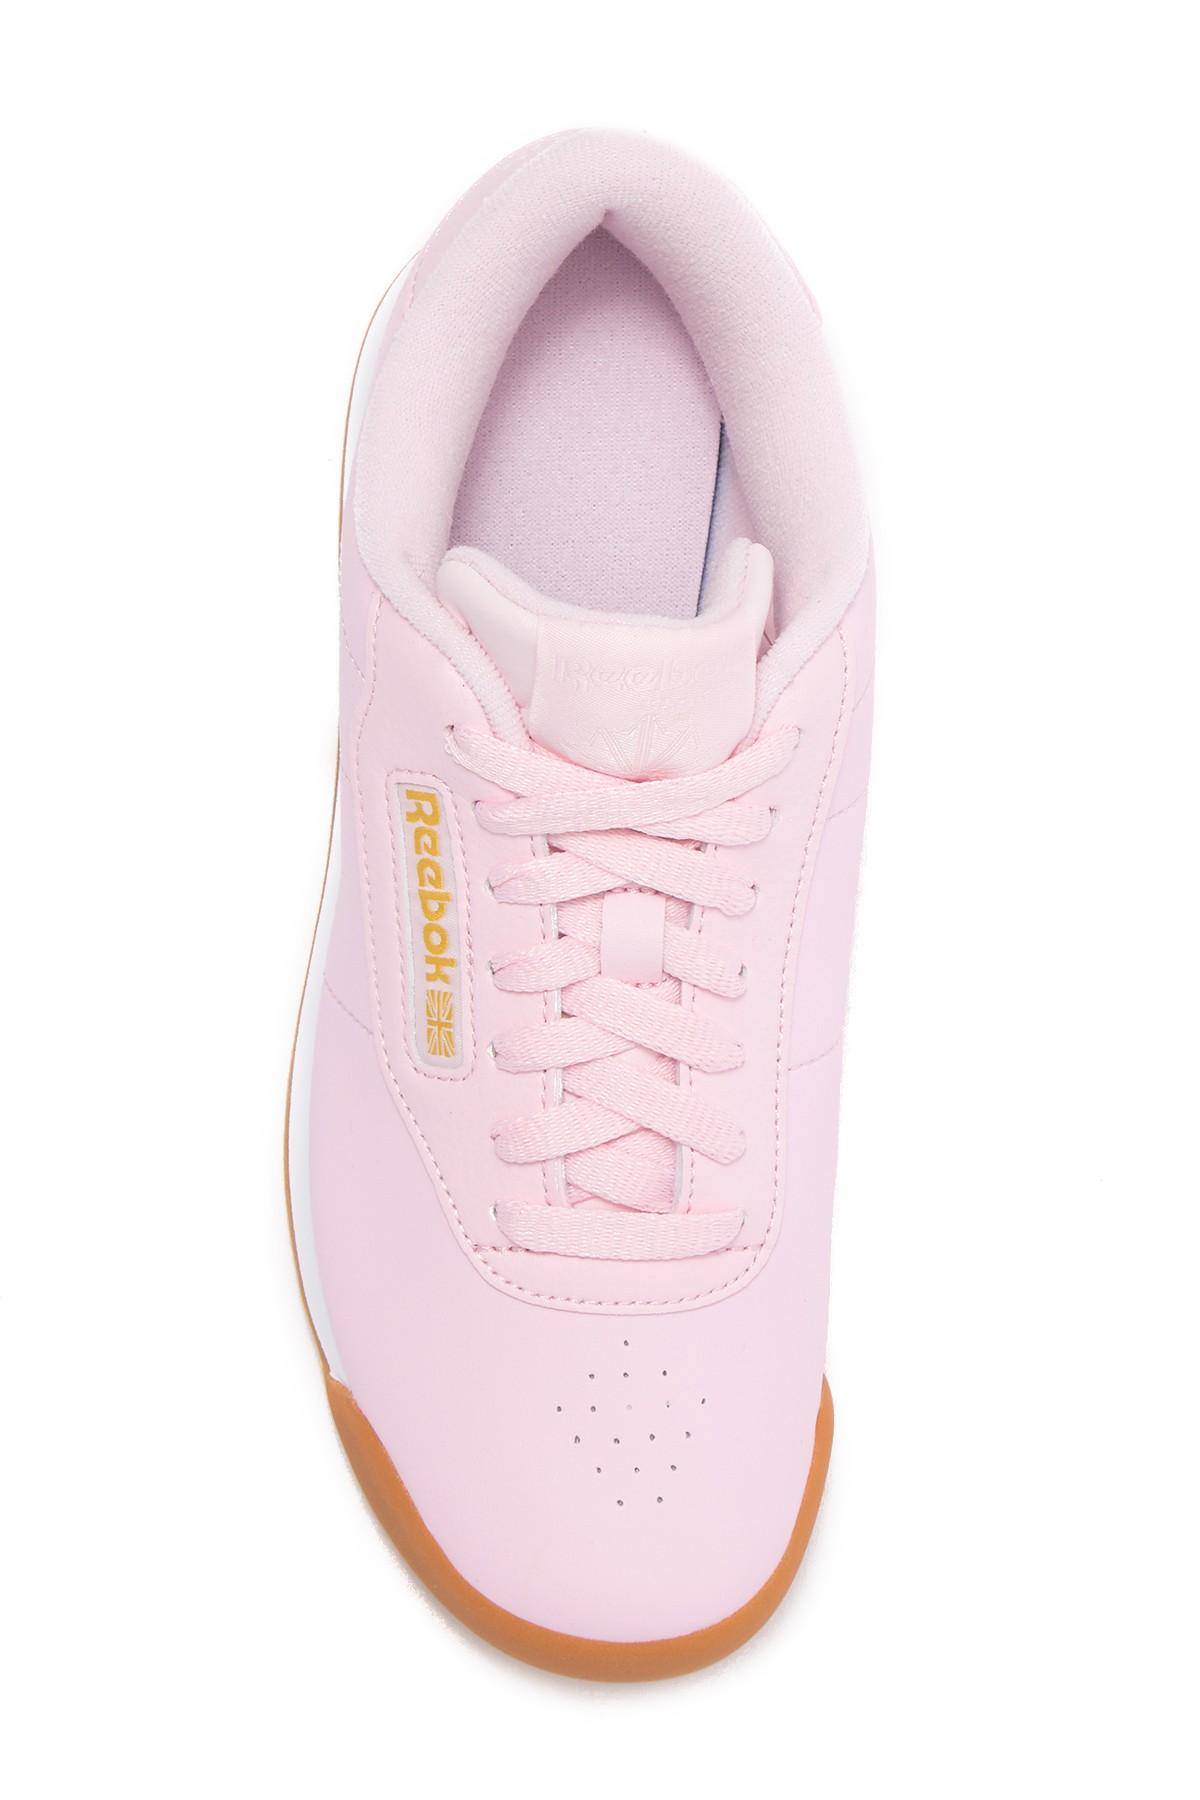 Reebok Princess Wide Fashion Shoes,pink/white/gold Metallic,5.5 M Us | Lyst